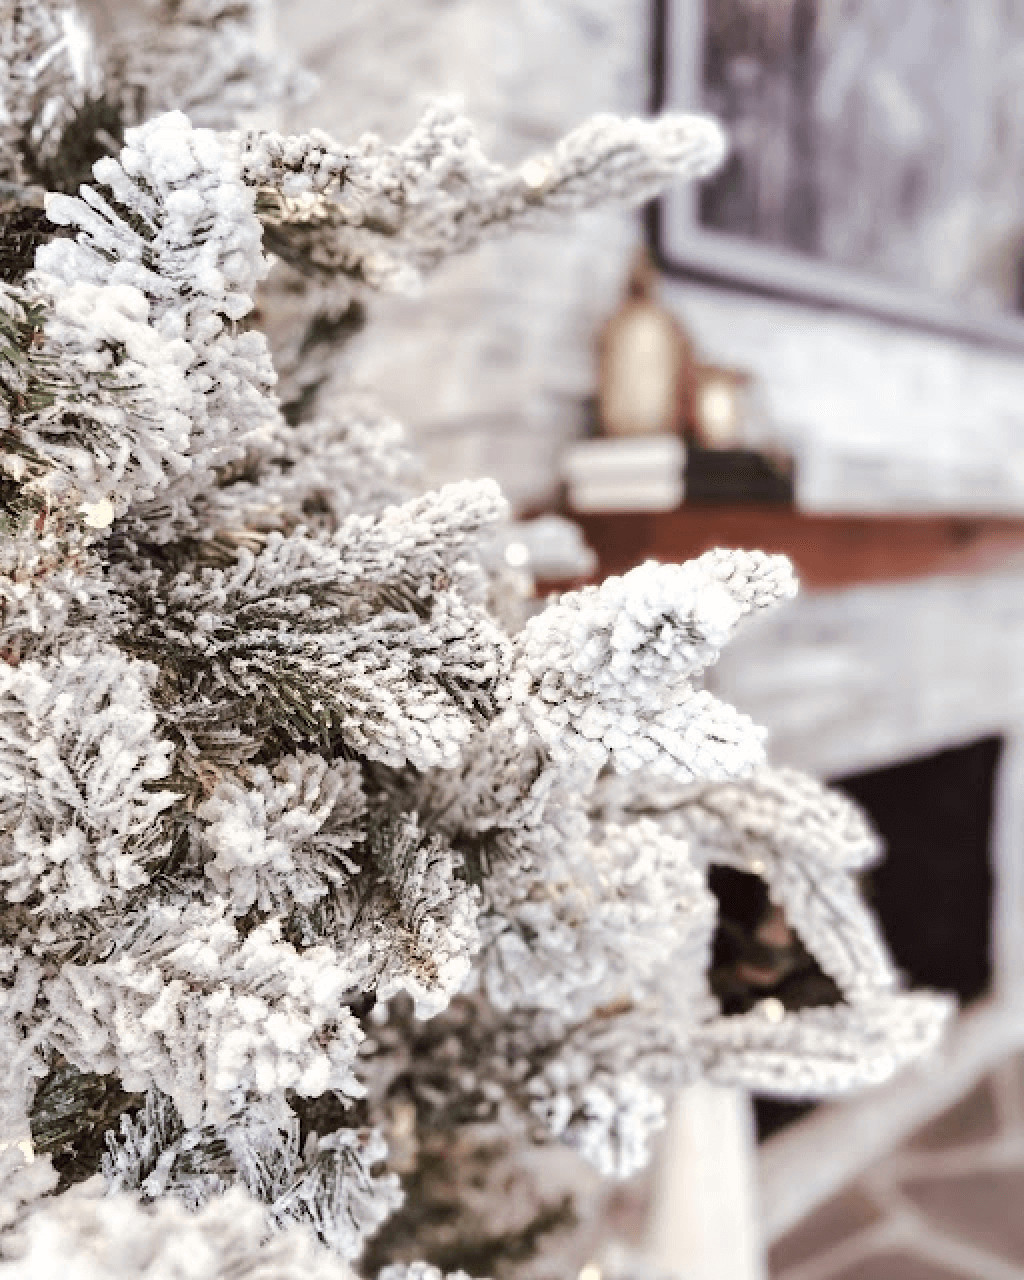 King of Christmas 6.5' Queen Flock® Slim Artificial Christmas Tree Unlit